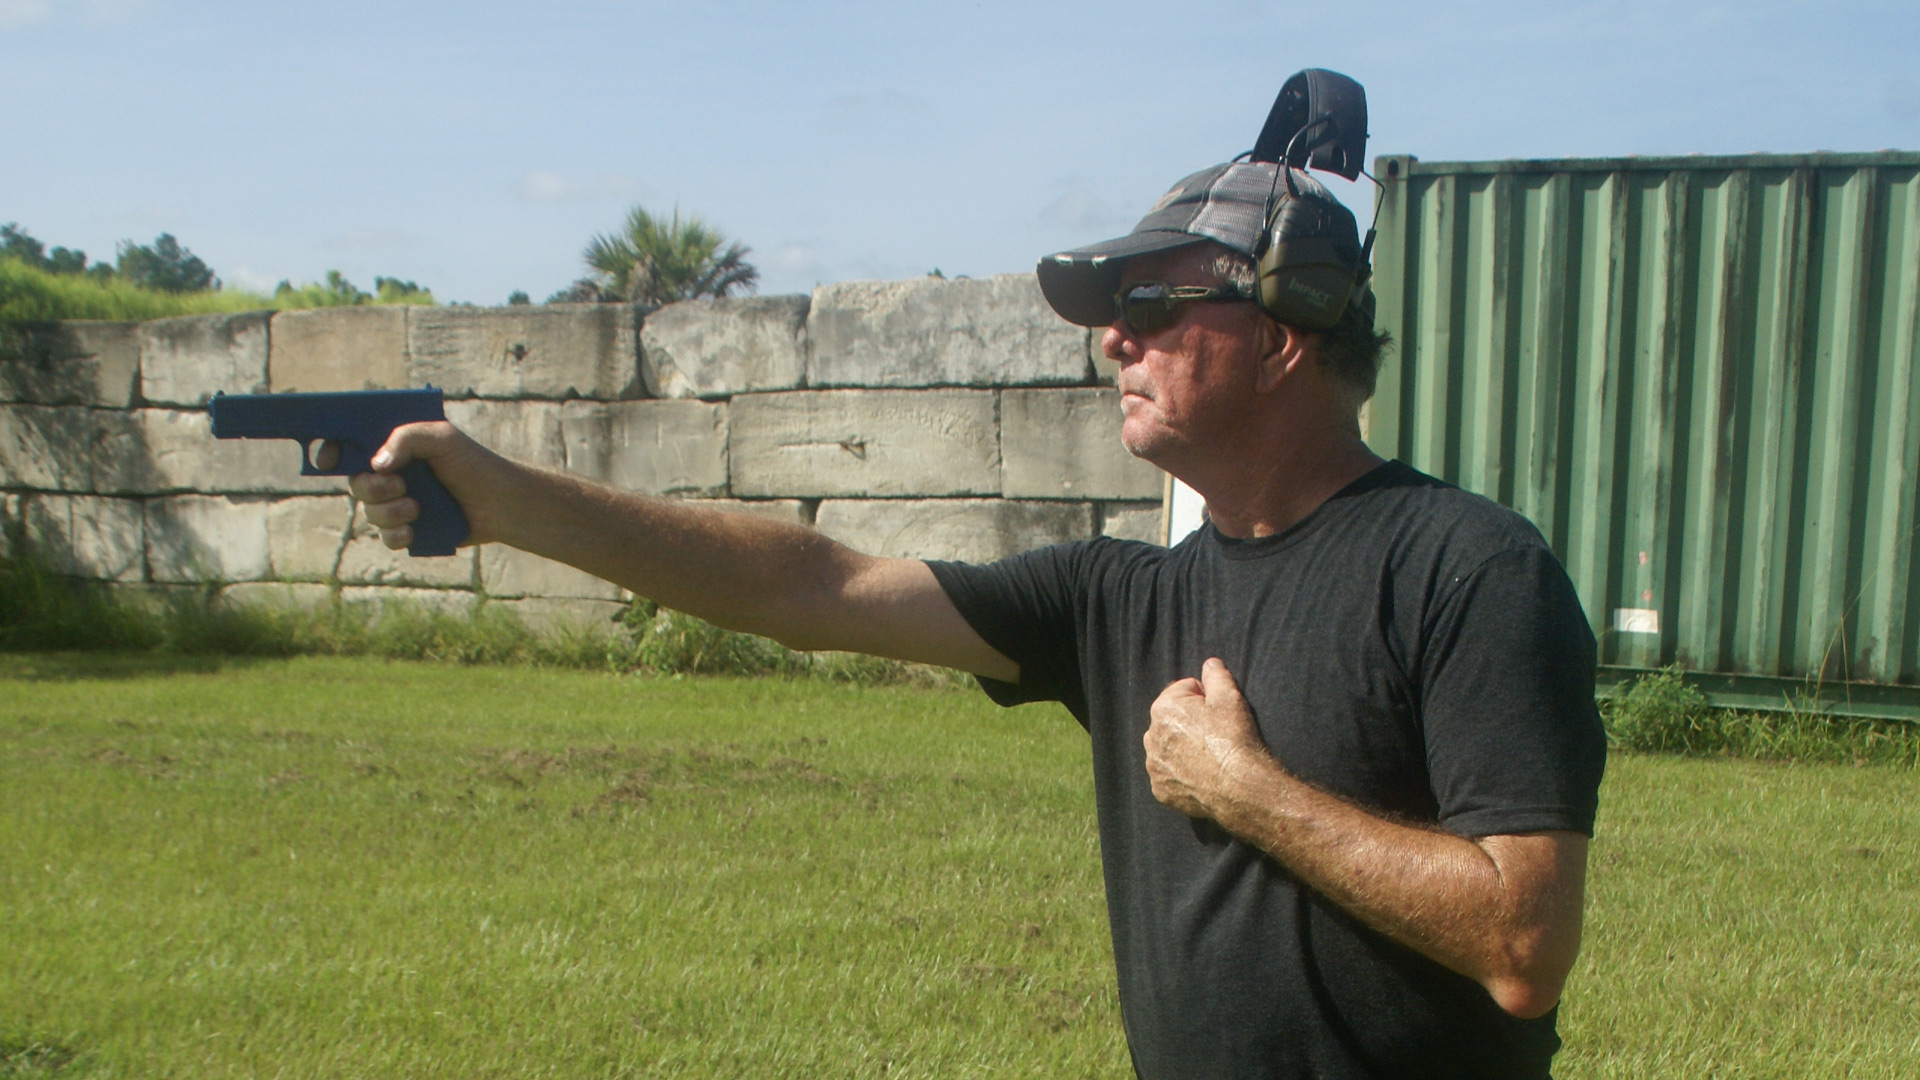 John Reilly displays one-handed pistol grip